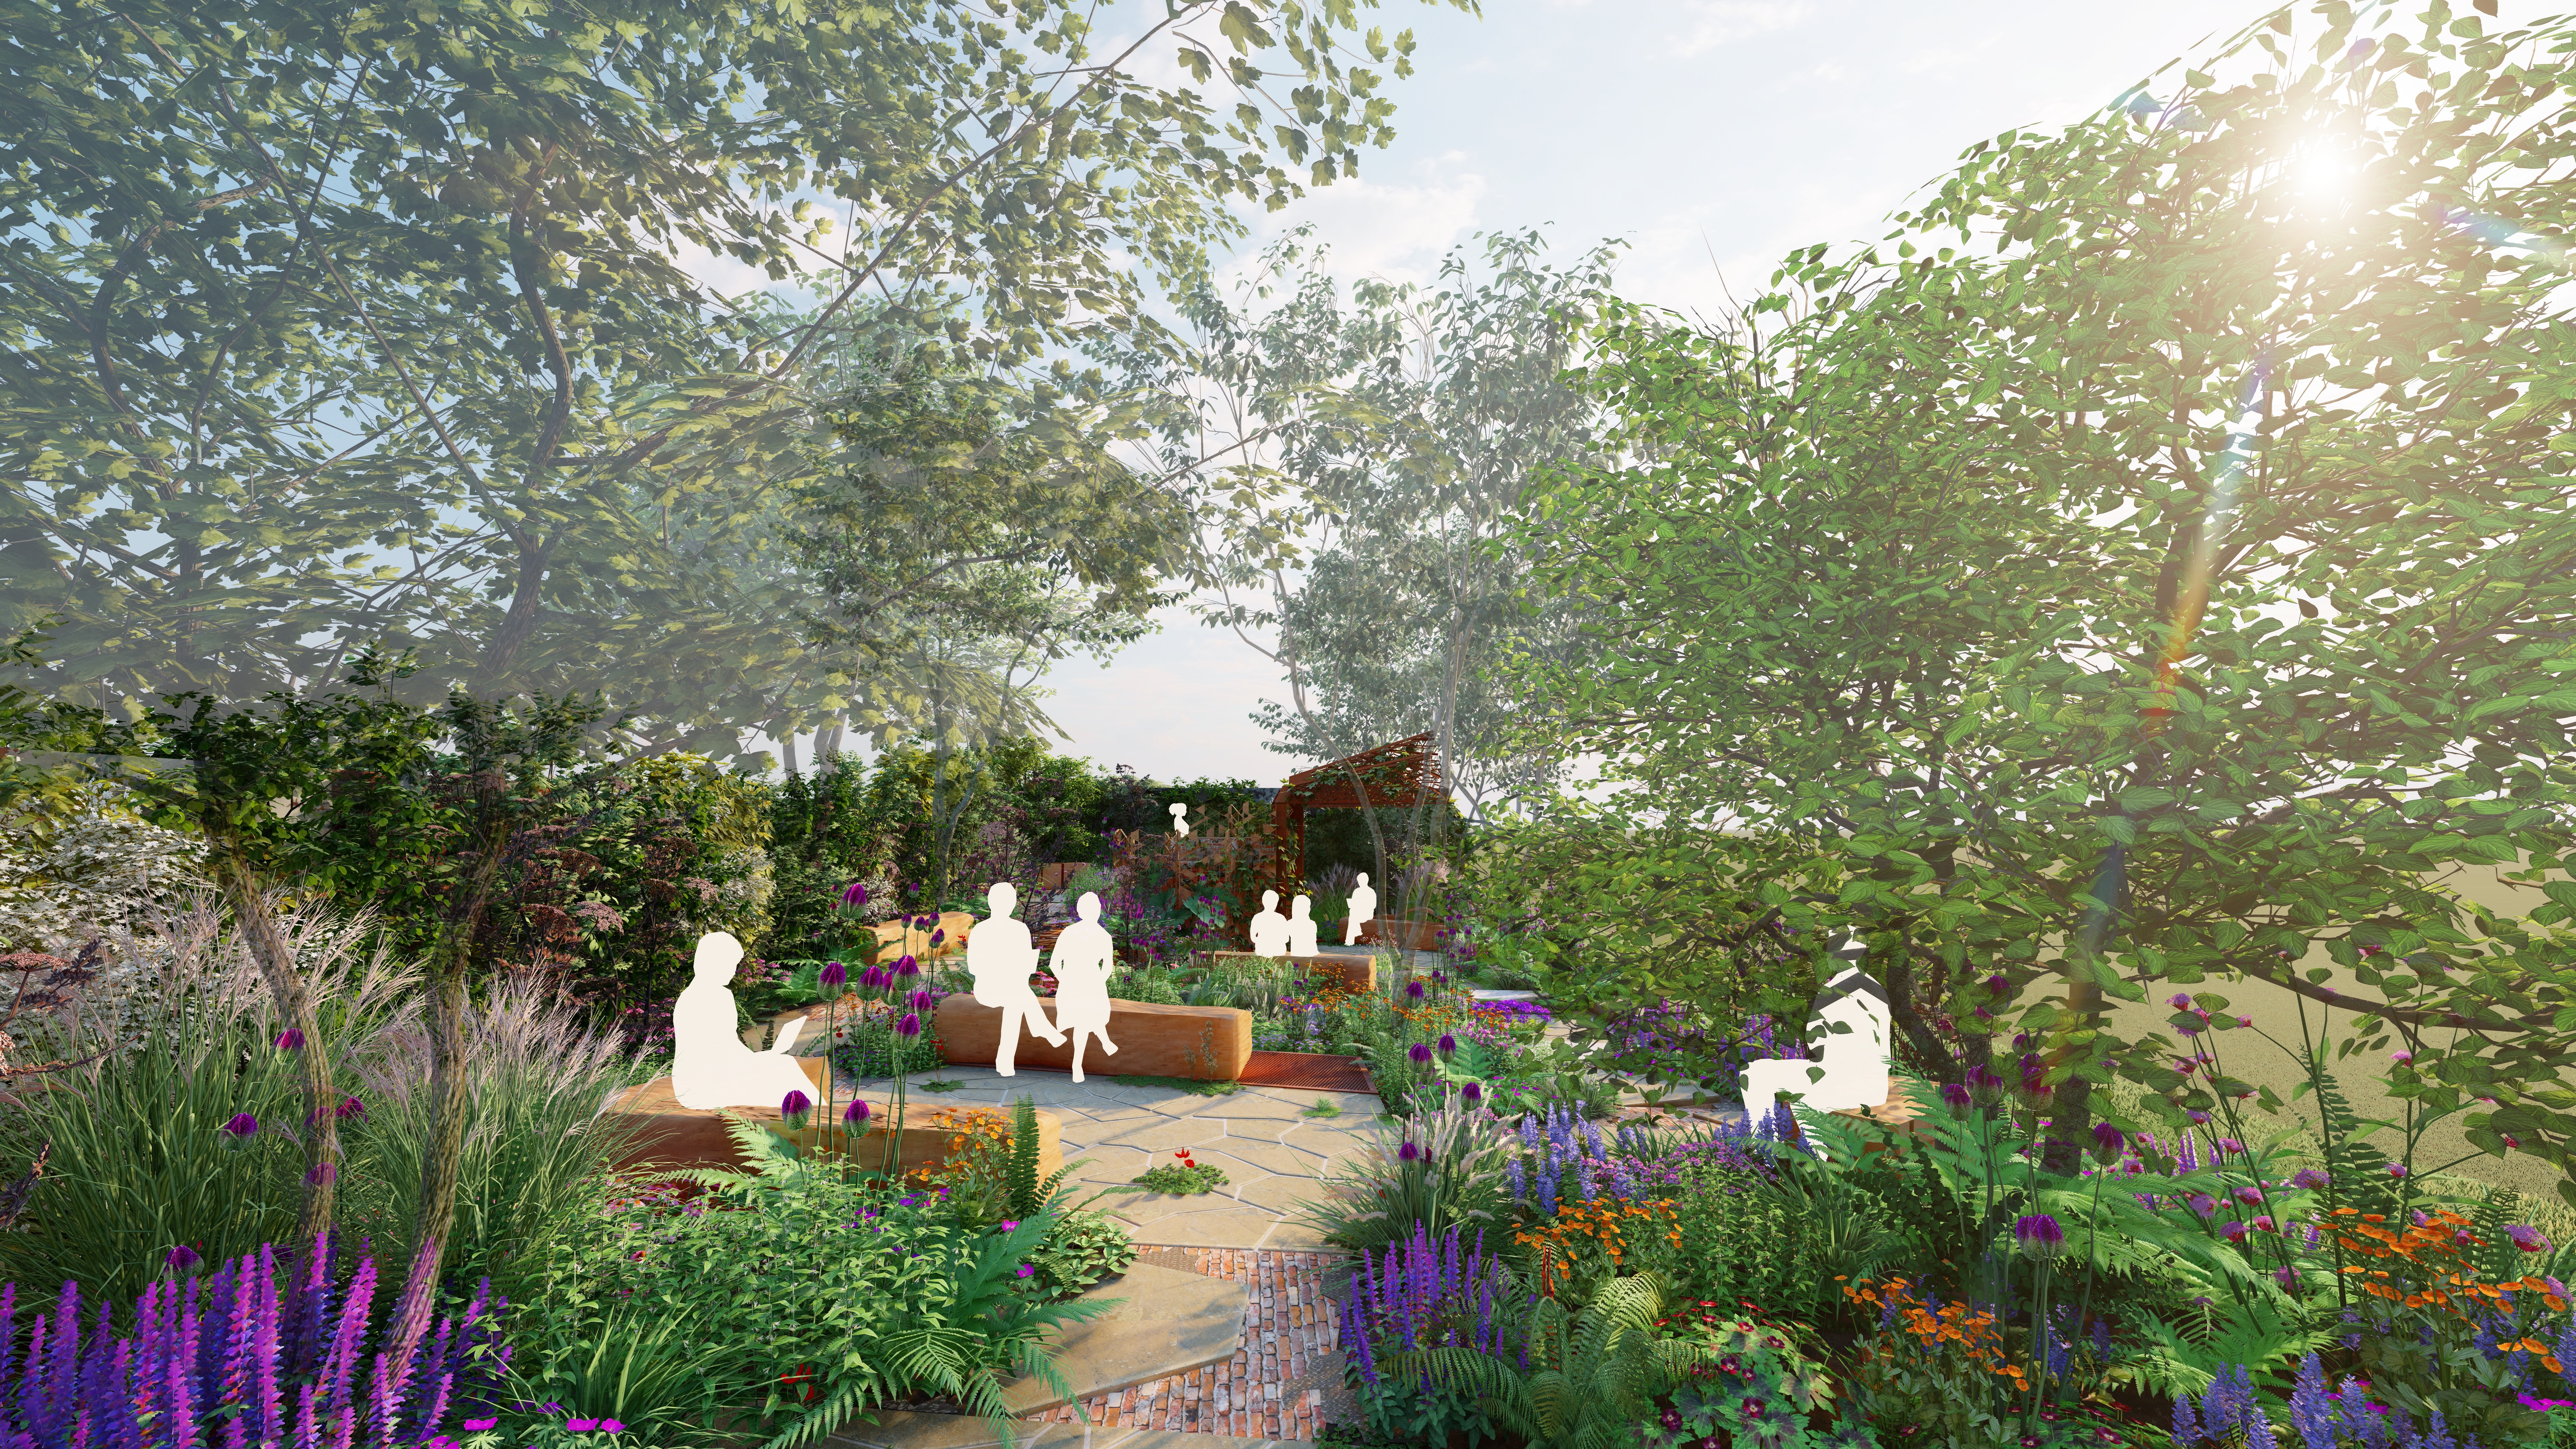 The Octavia Hill Garden by Blue Diamond with The National Trust, Show Garden, designed by Ann-Marie Powell.og